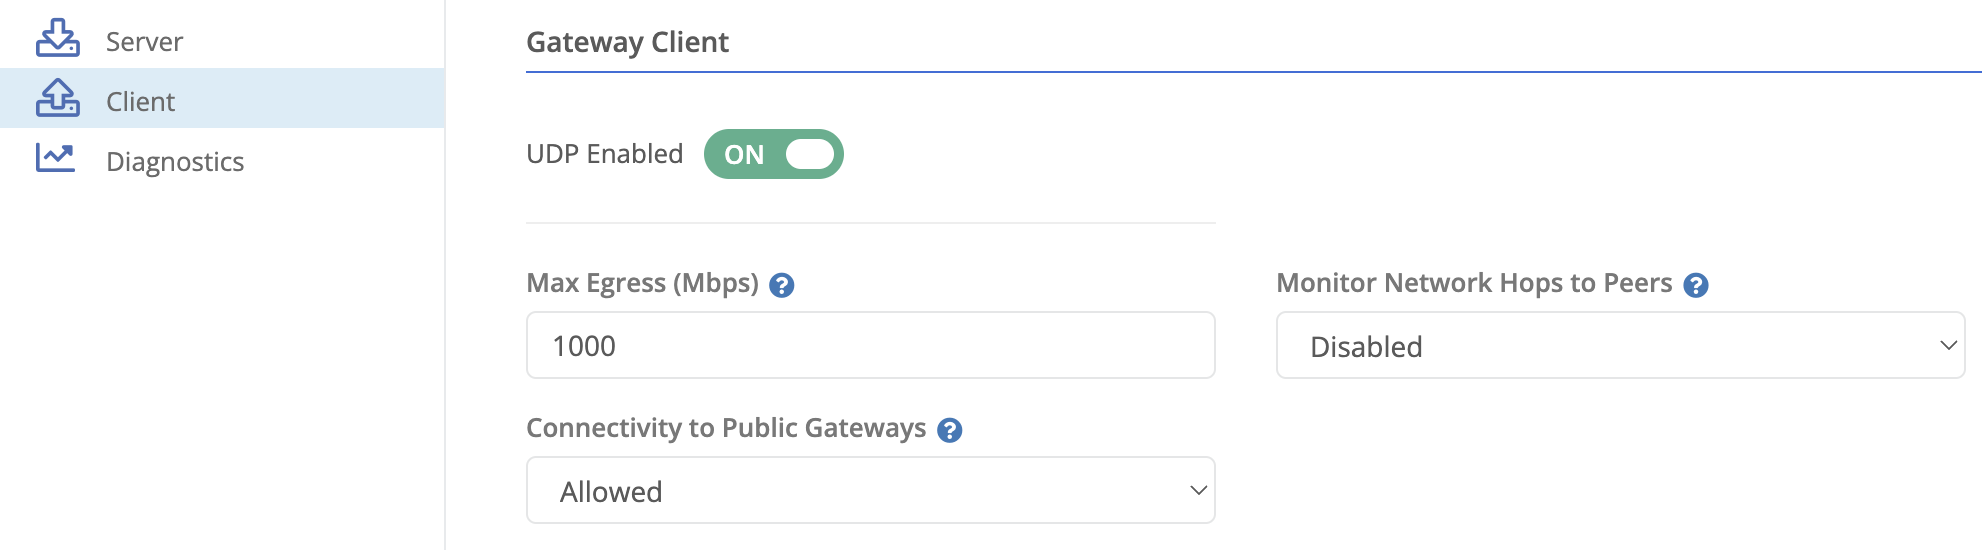 screenshot of gateway client settings